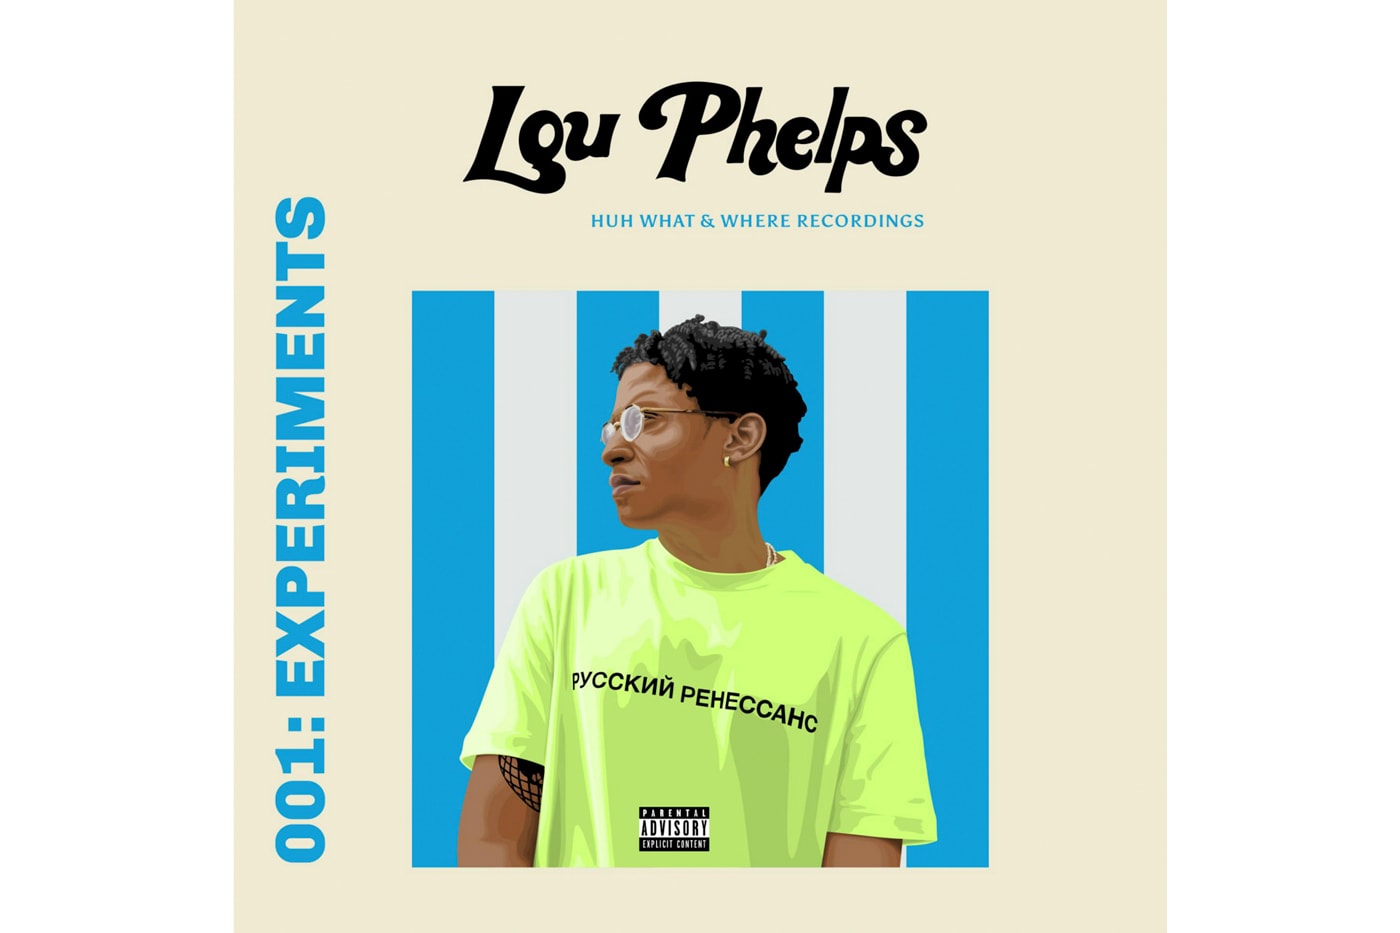 Lou Phelps 001 Experiments